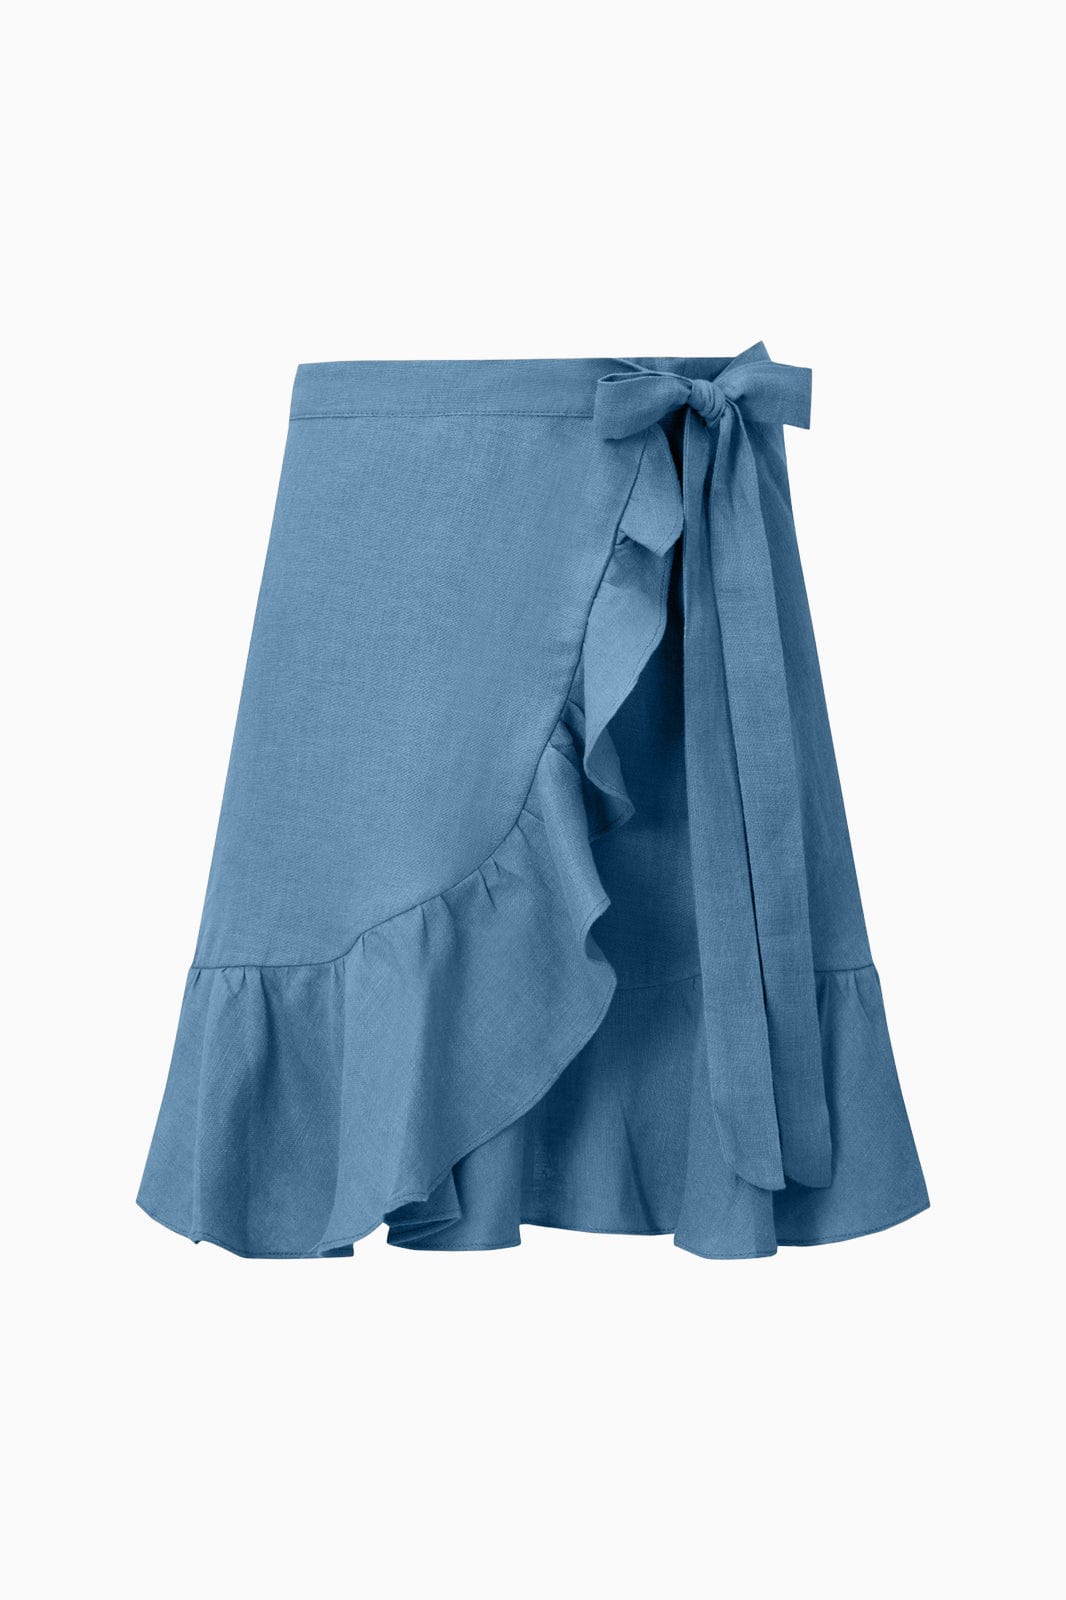 arkitaip Skirts The Sharon Ruffled Mini Skirt in poppy blue